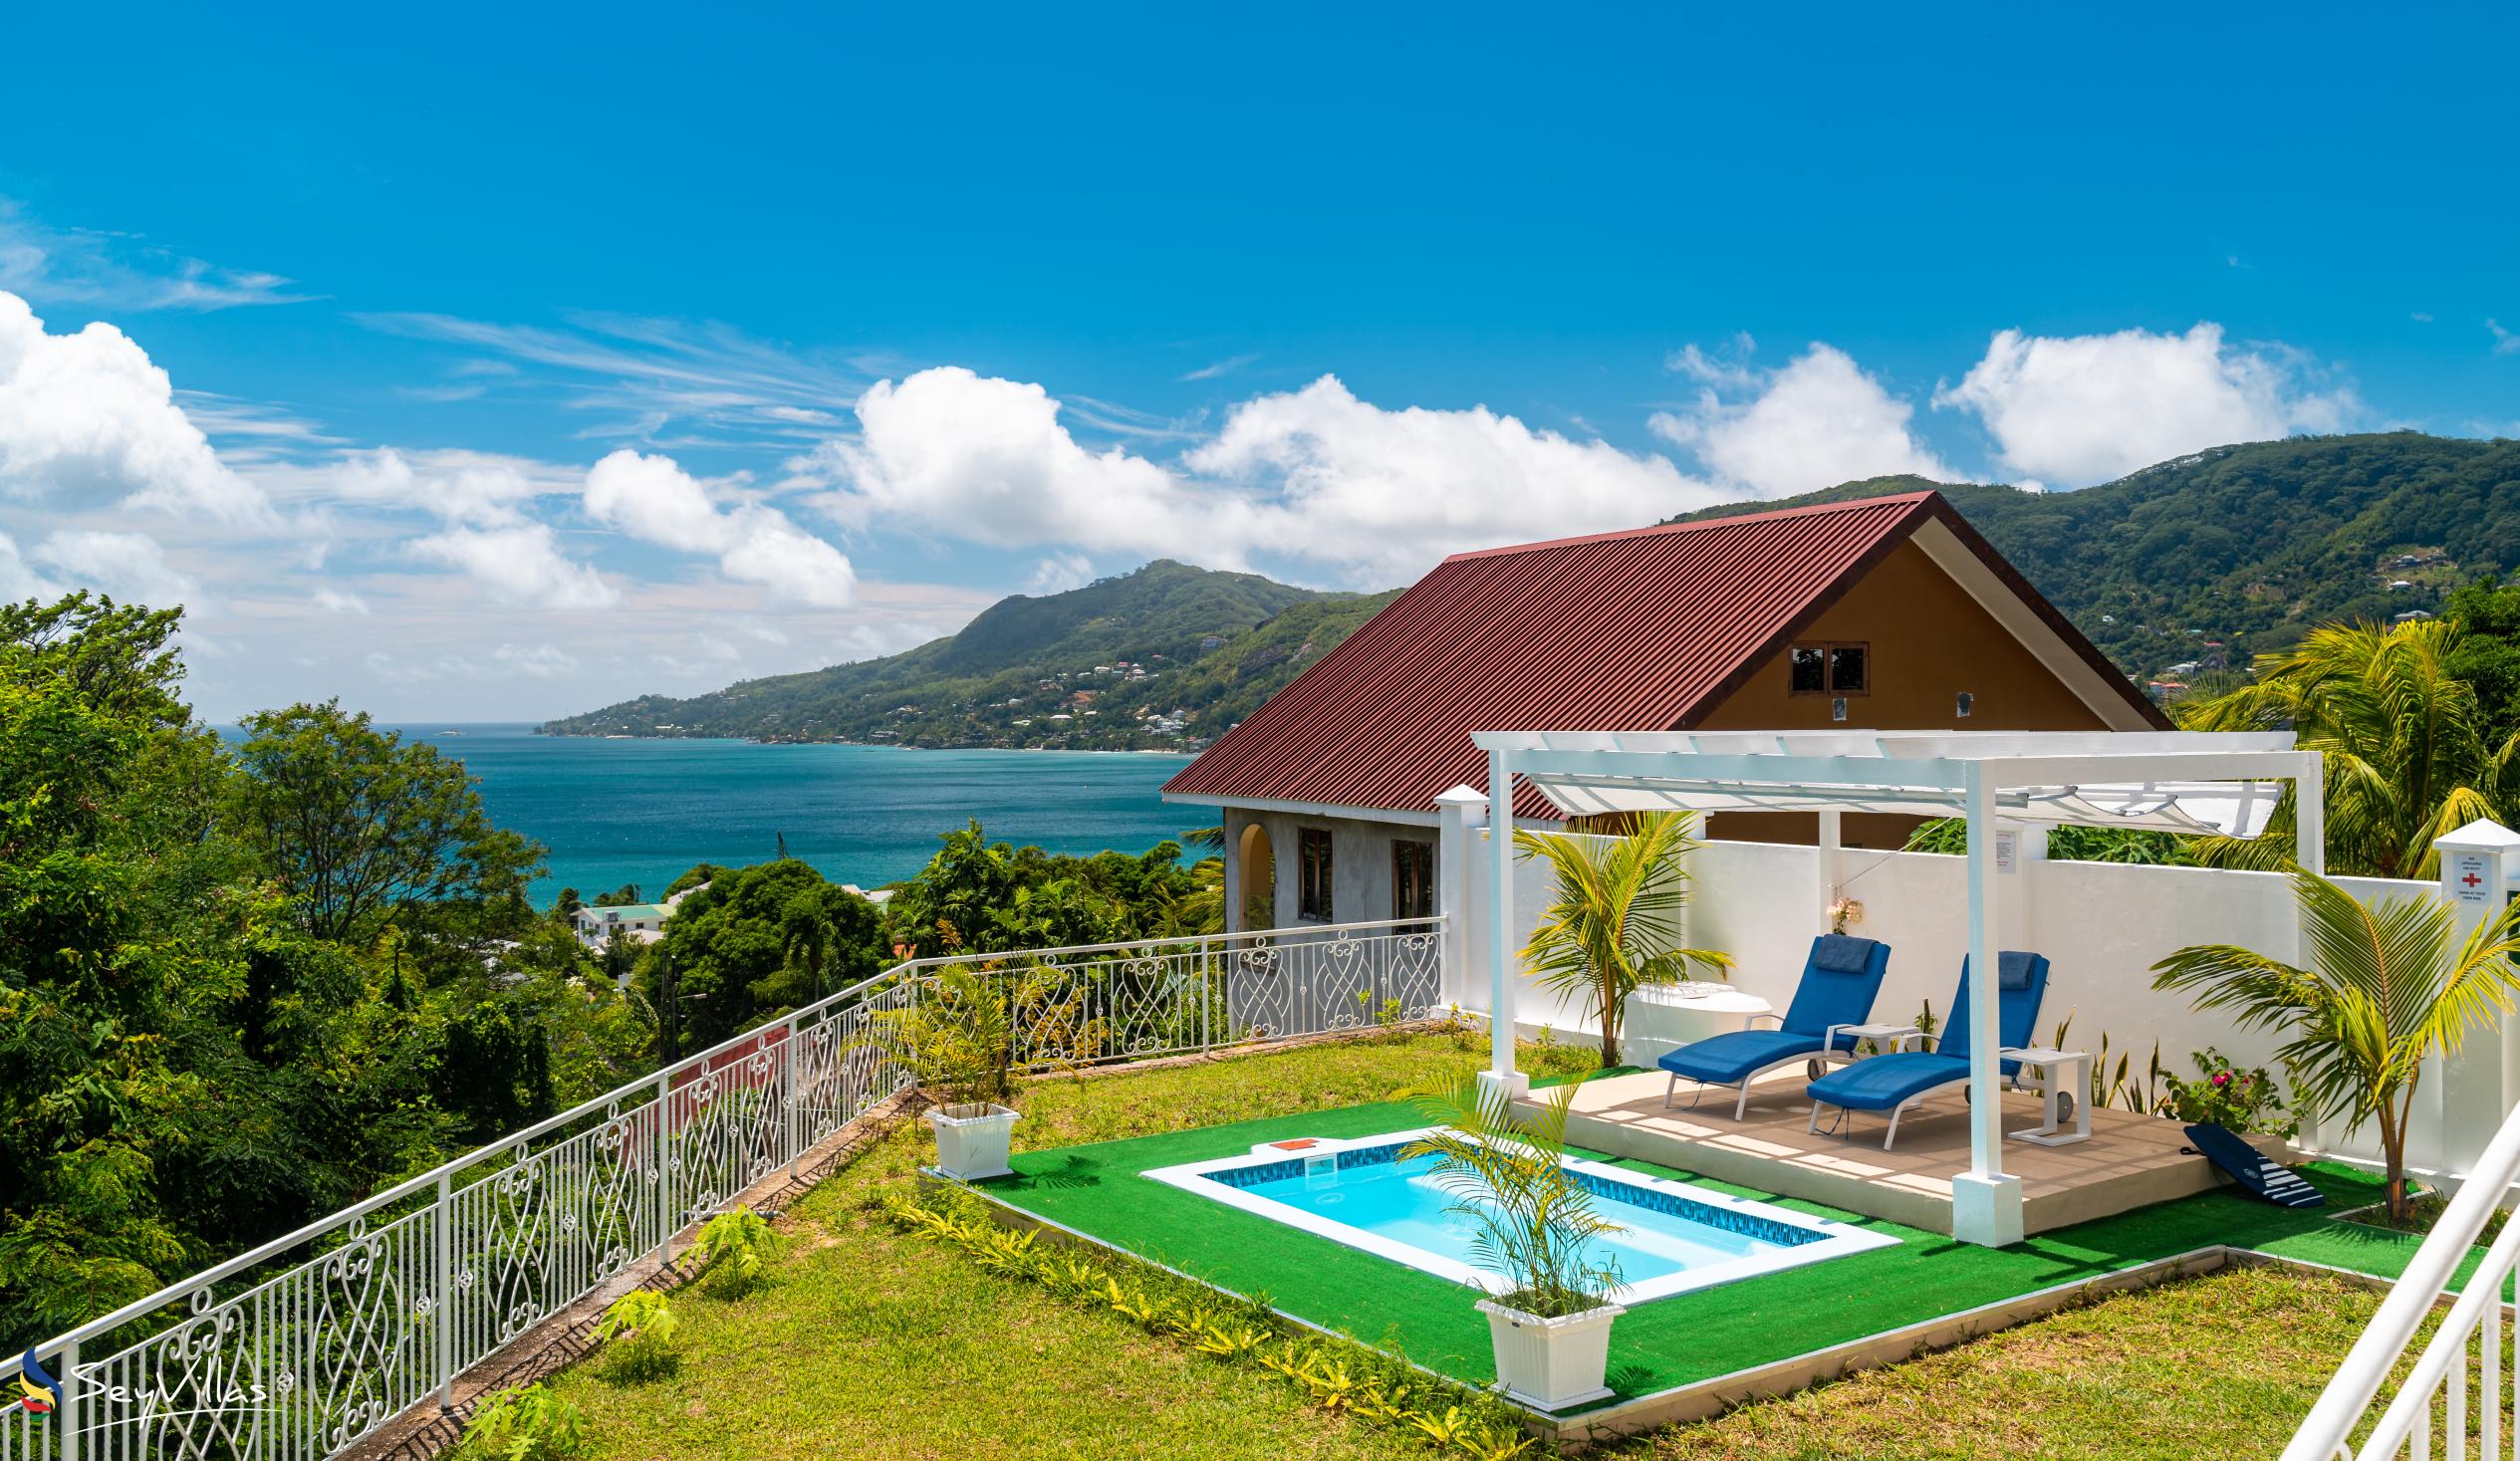 Photo 1: Villa Jasmin - Outdoor area - Mahé (Seychelles)